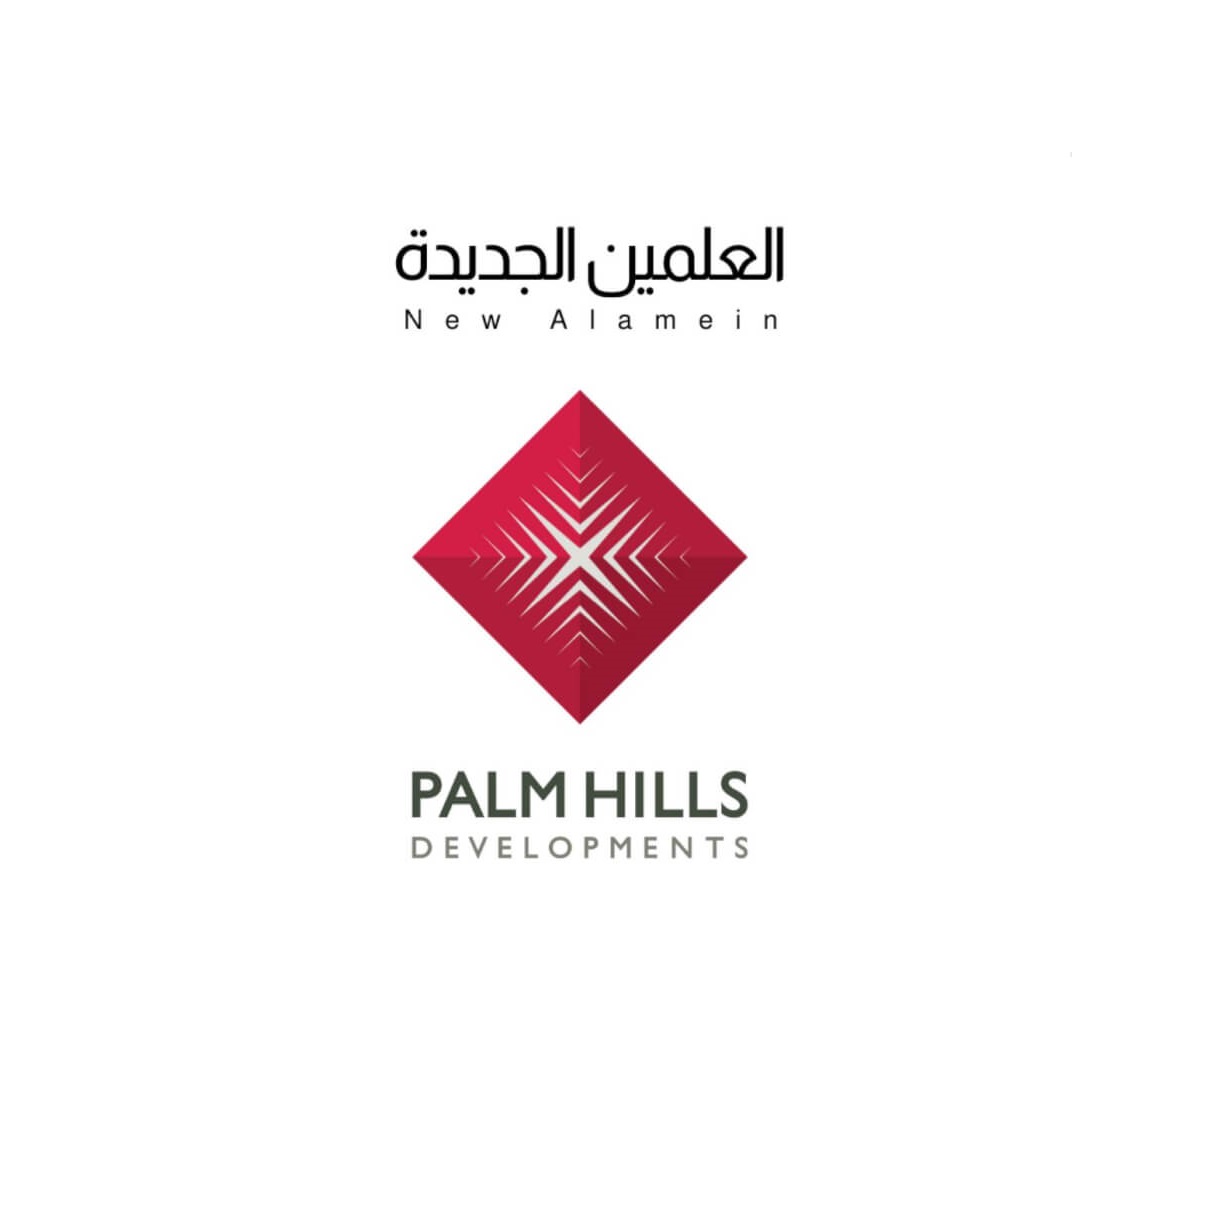 Palm Hills Development